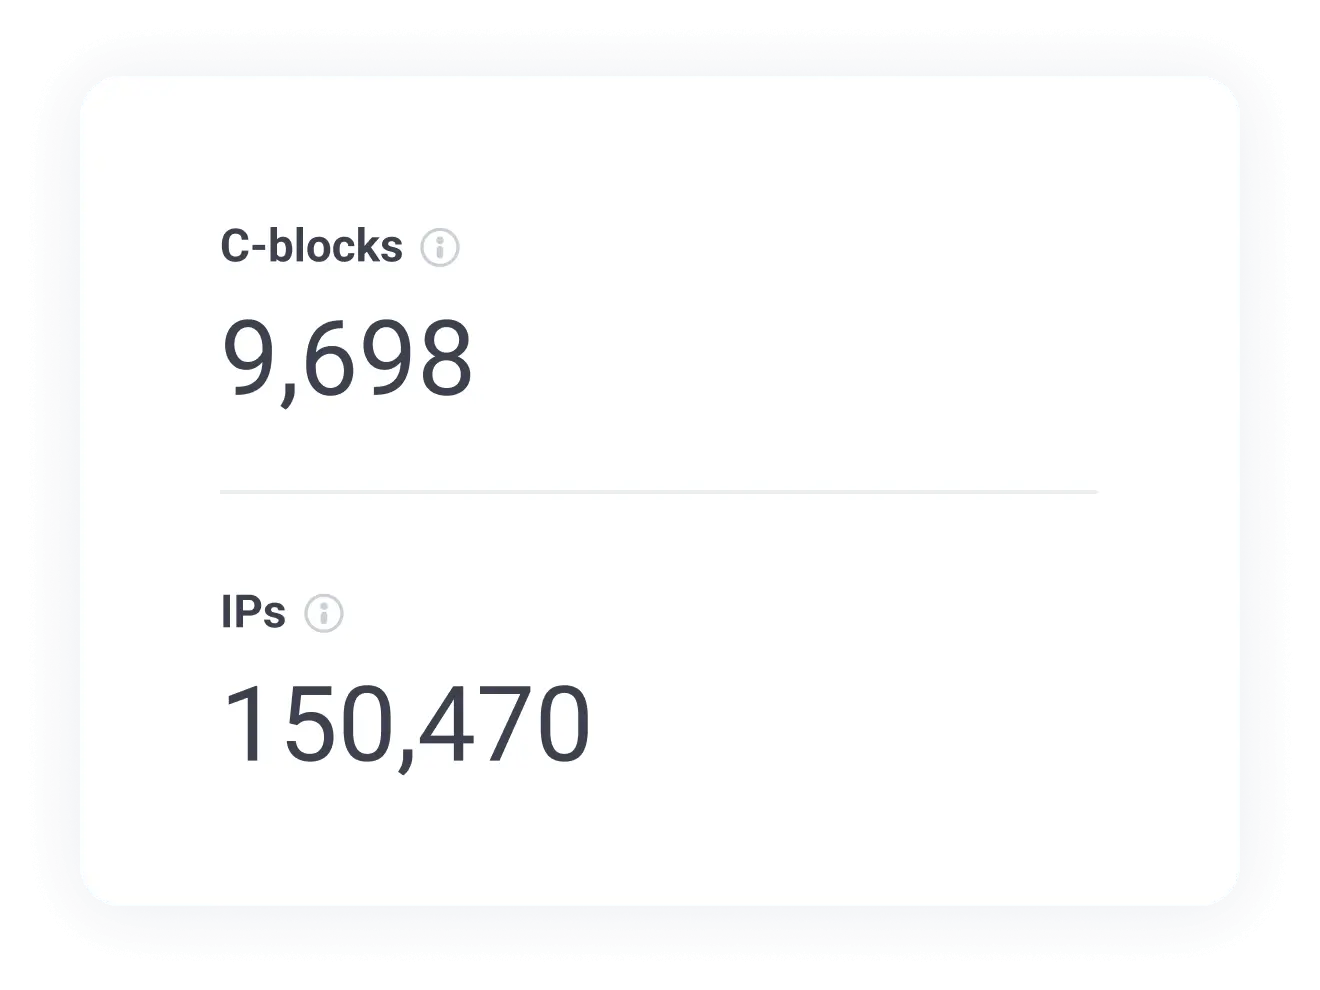 Verifique o número de IPs e blocos C exclusivos